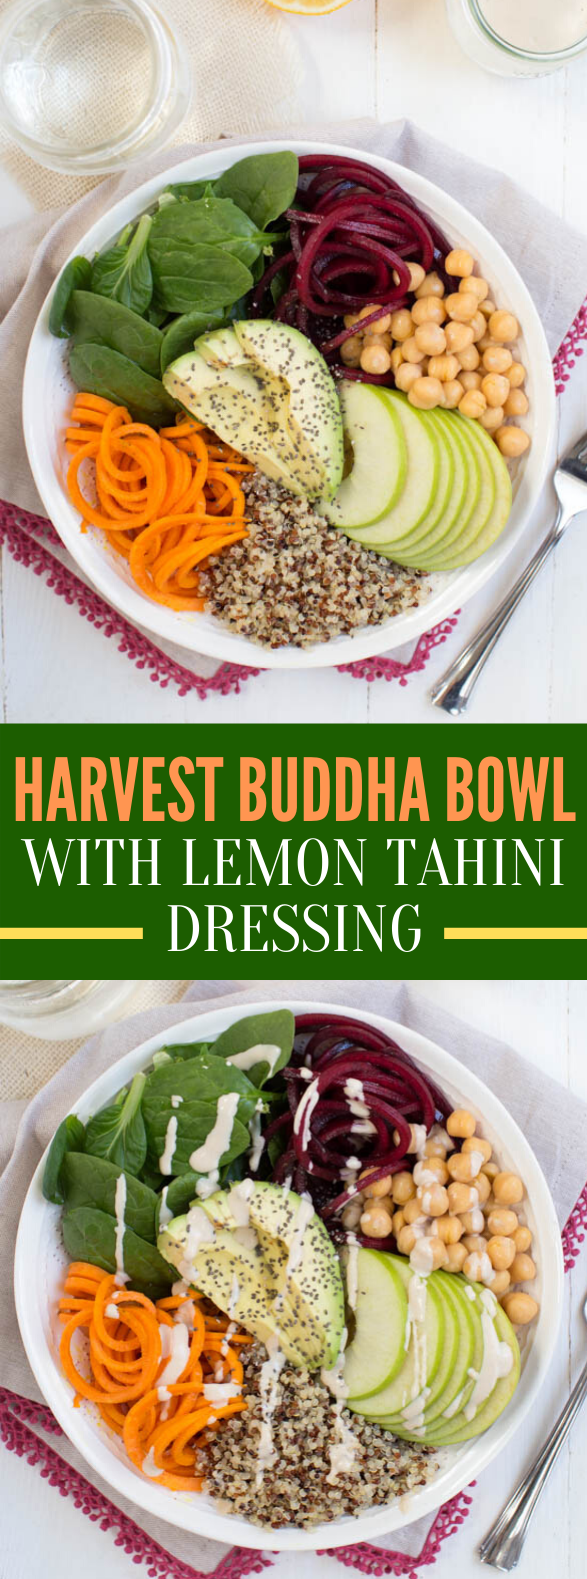 HARVEST BUDDHA BOWL WITH LEMON TAHINI DRESSING #vegetarian #lunch